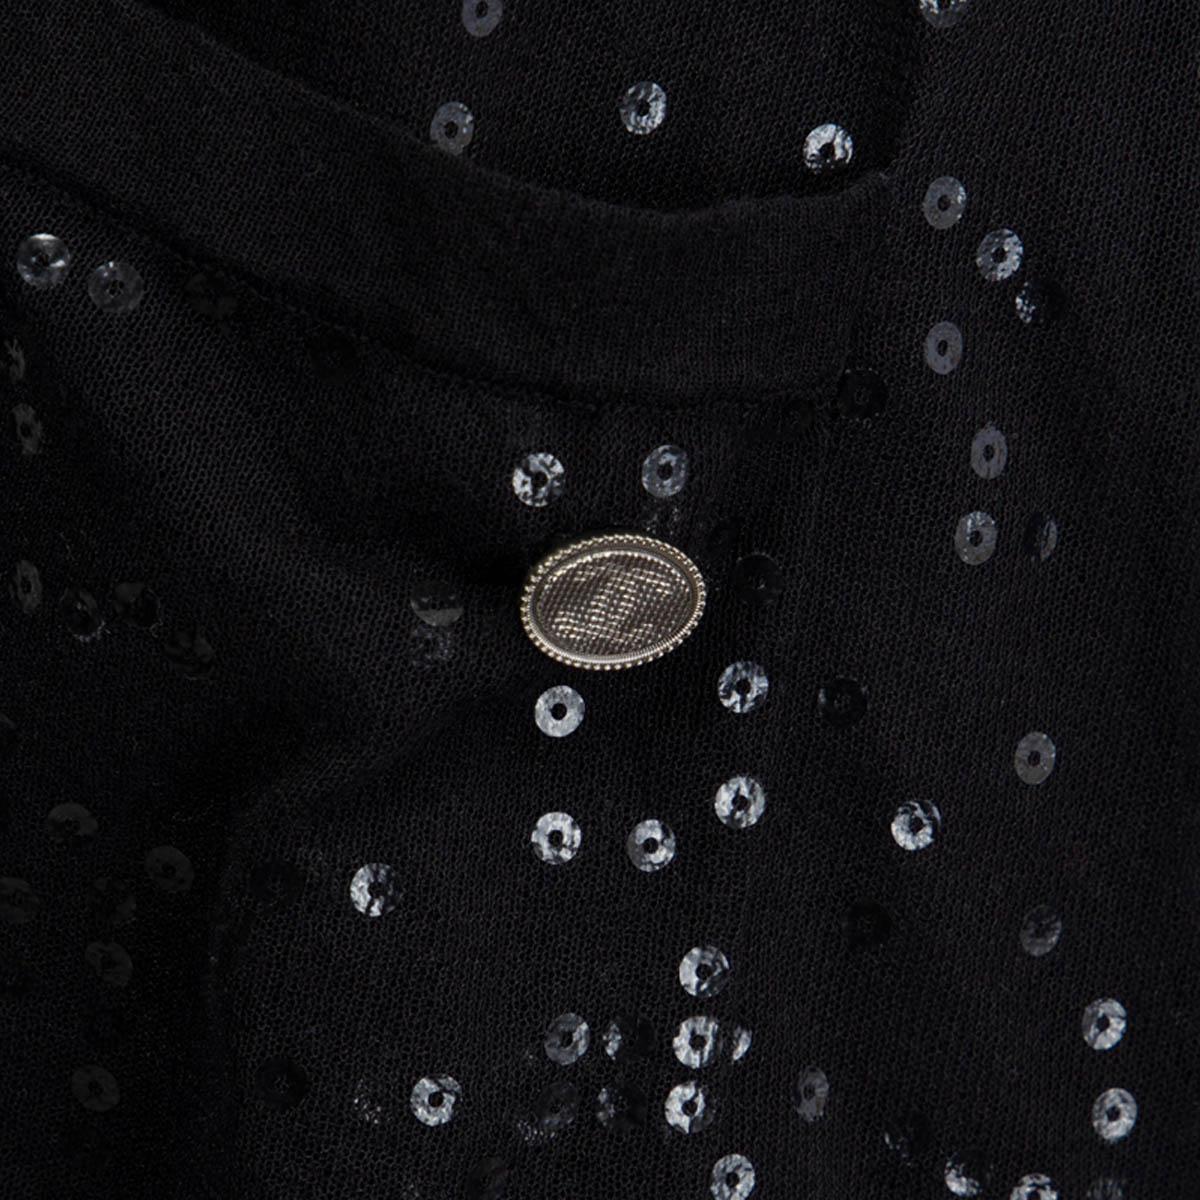 CHANEL black 2017 17P SEQUIN CAMELLIA SHEER SHIFT Dress 38 S For Sale 2